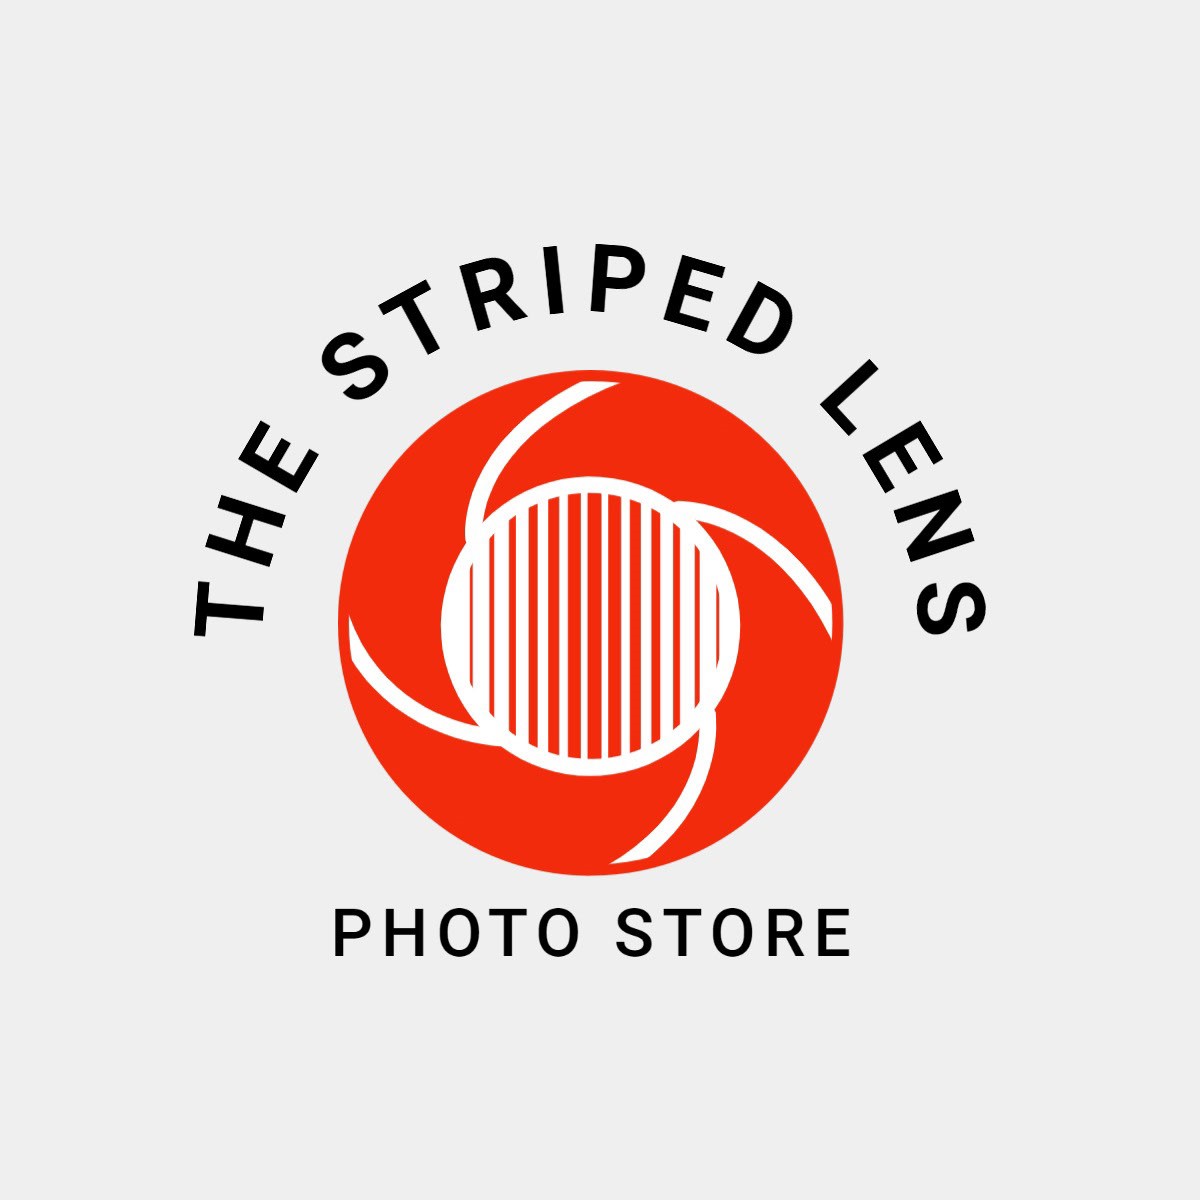 Cornerstone - Random Business Logos - Free Transparent PNG Clipart Images  Download